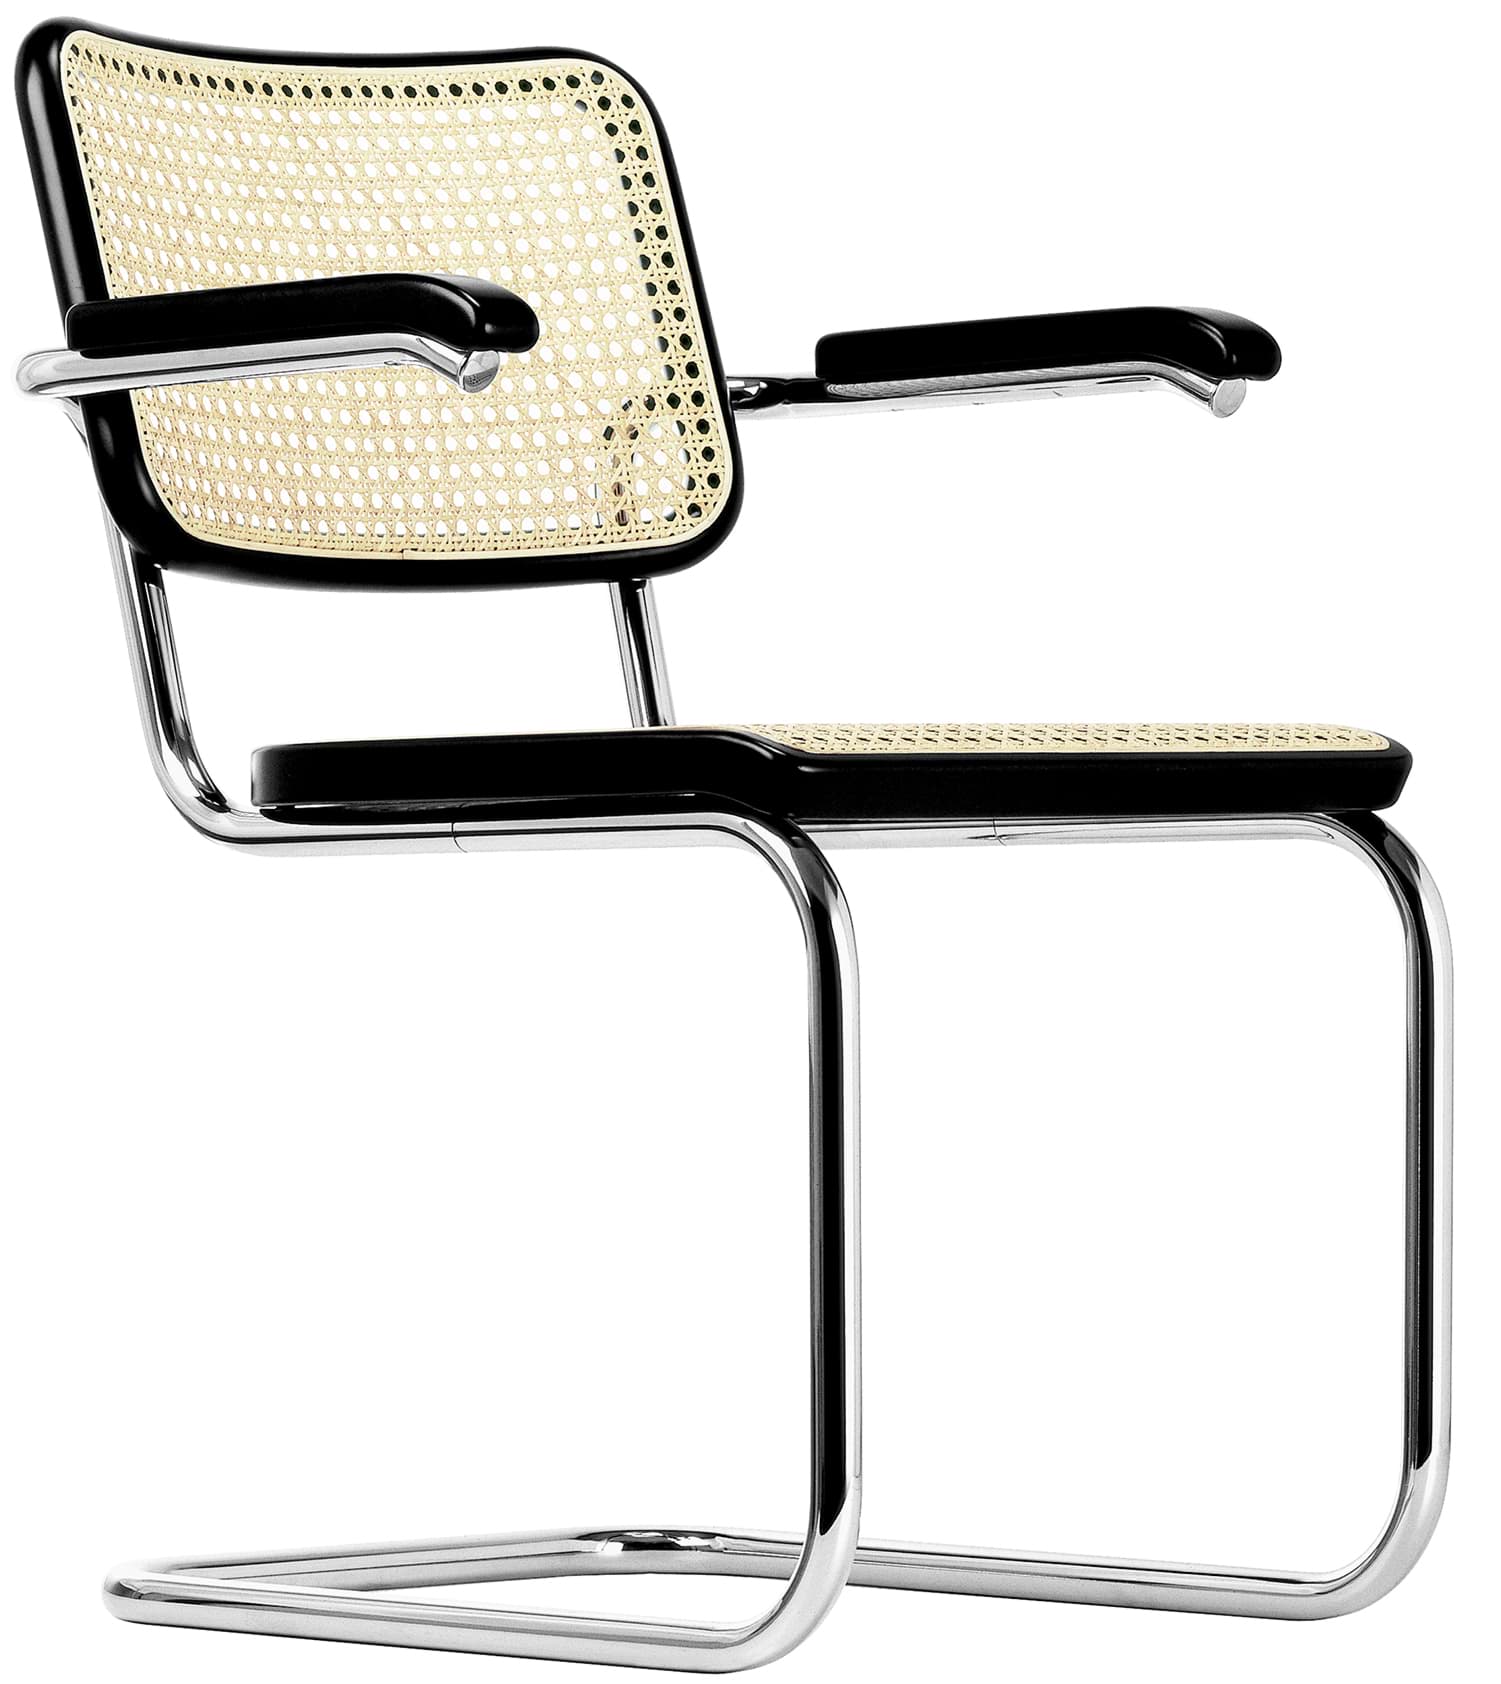 Marcel Breuer. 64 S V Bauhaus Chair Movement Cantilever -